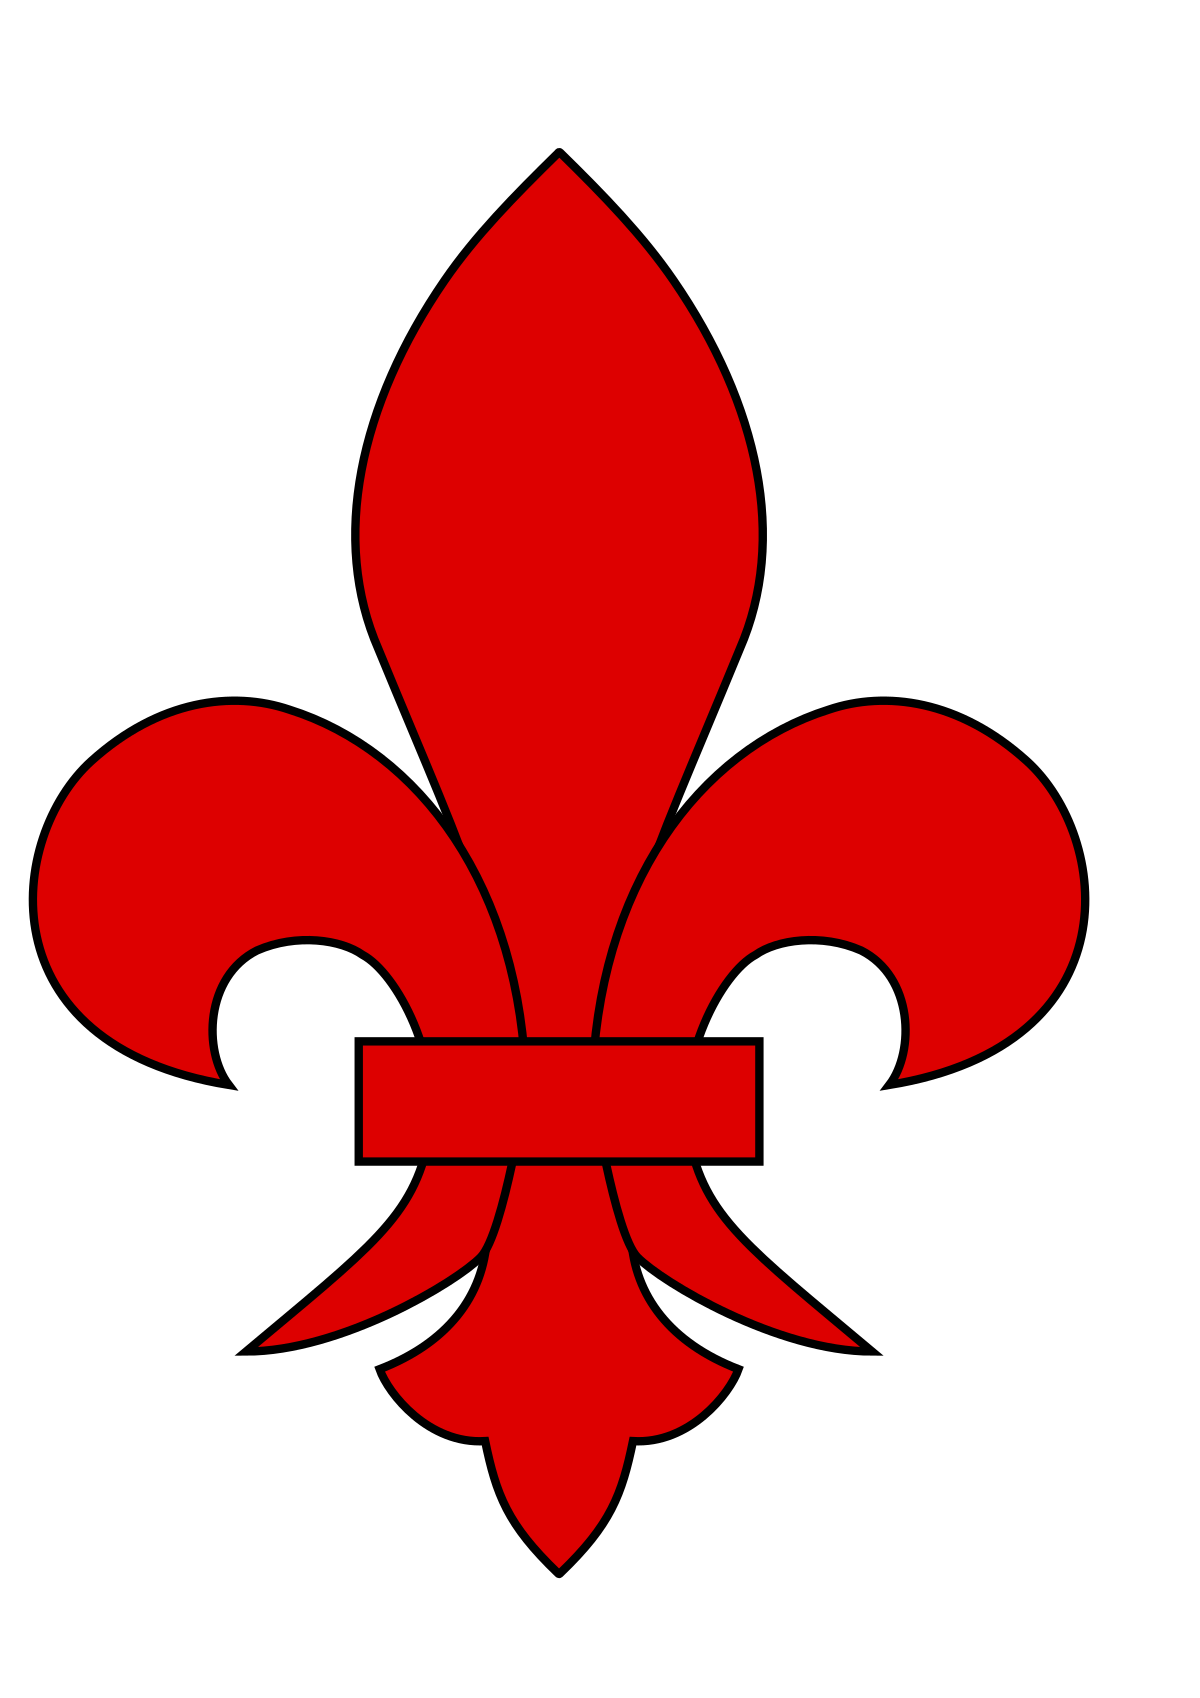 https://upload.wikimedia.org/wikipedia/commons/thumb/a/a2/Fleur-de-lis-red.svg/1200px-Fleur-de-lis-red.svg.png